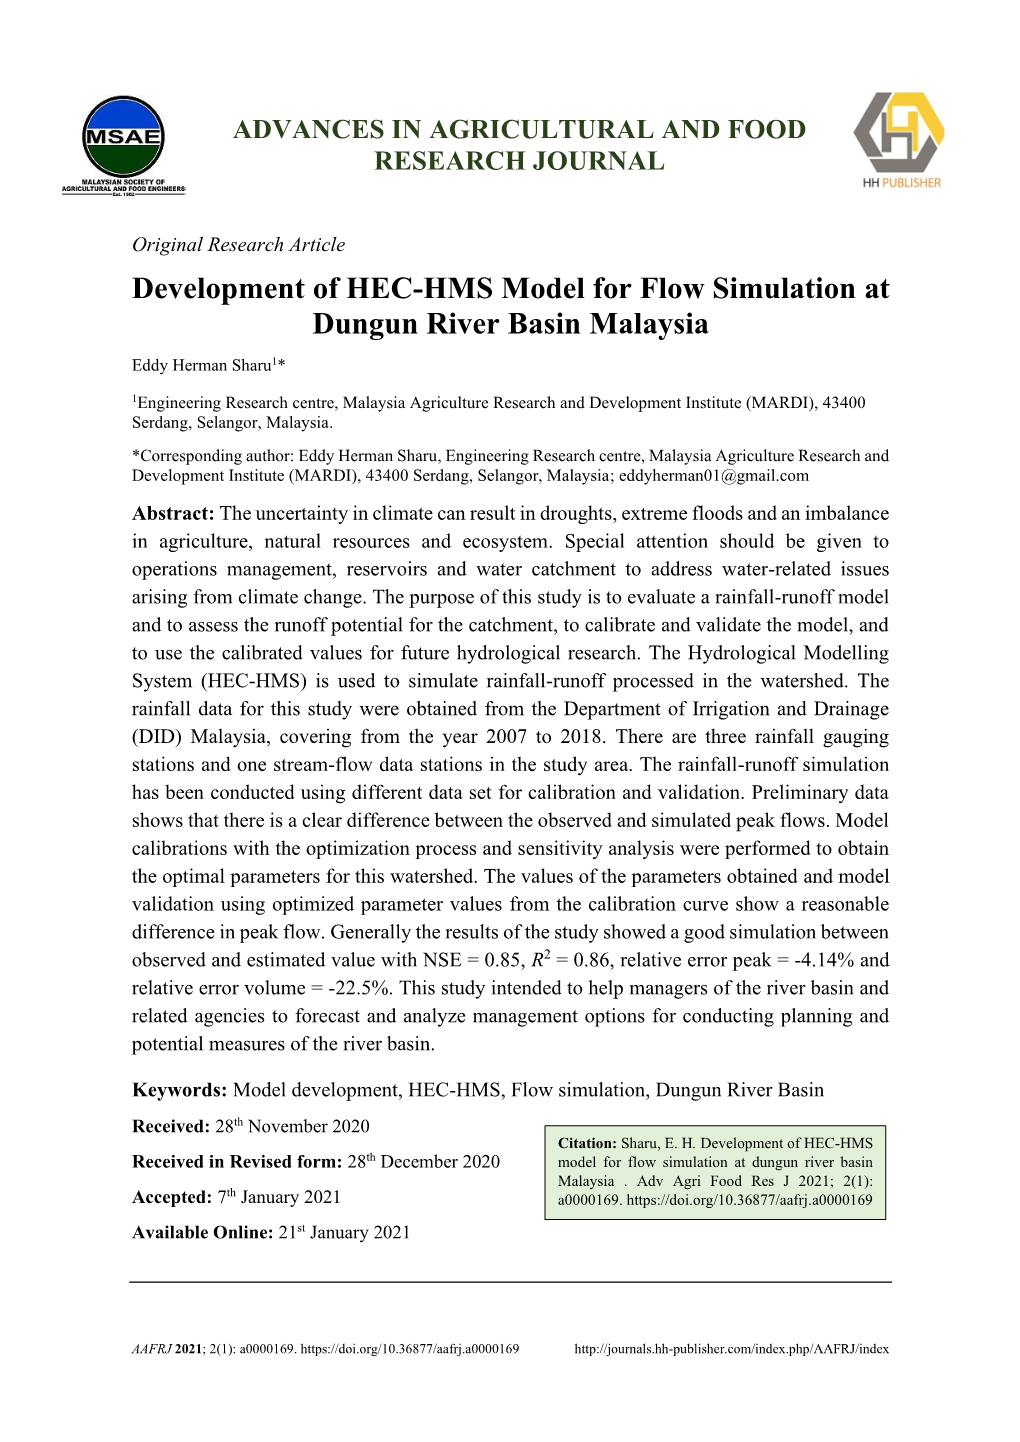 Development of HEC-HMS Model for Flow Simulation at Dungun River Basin Malaysia